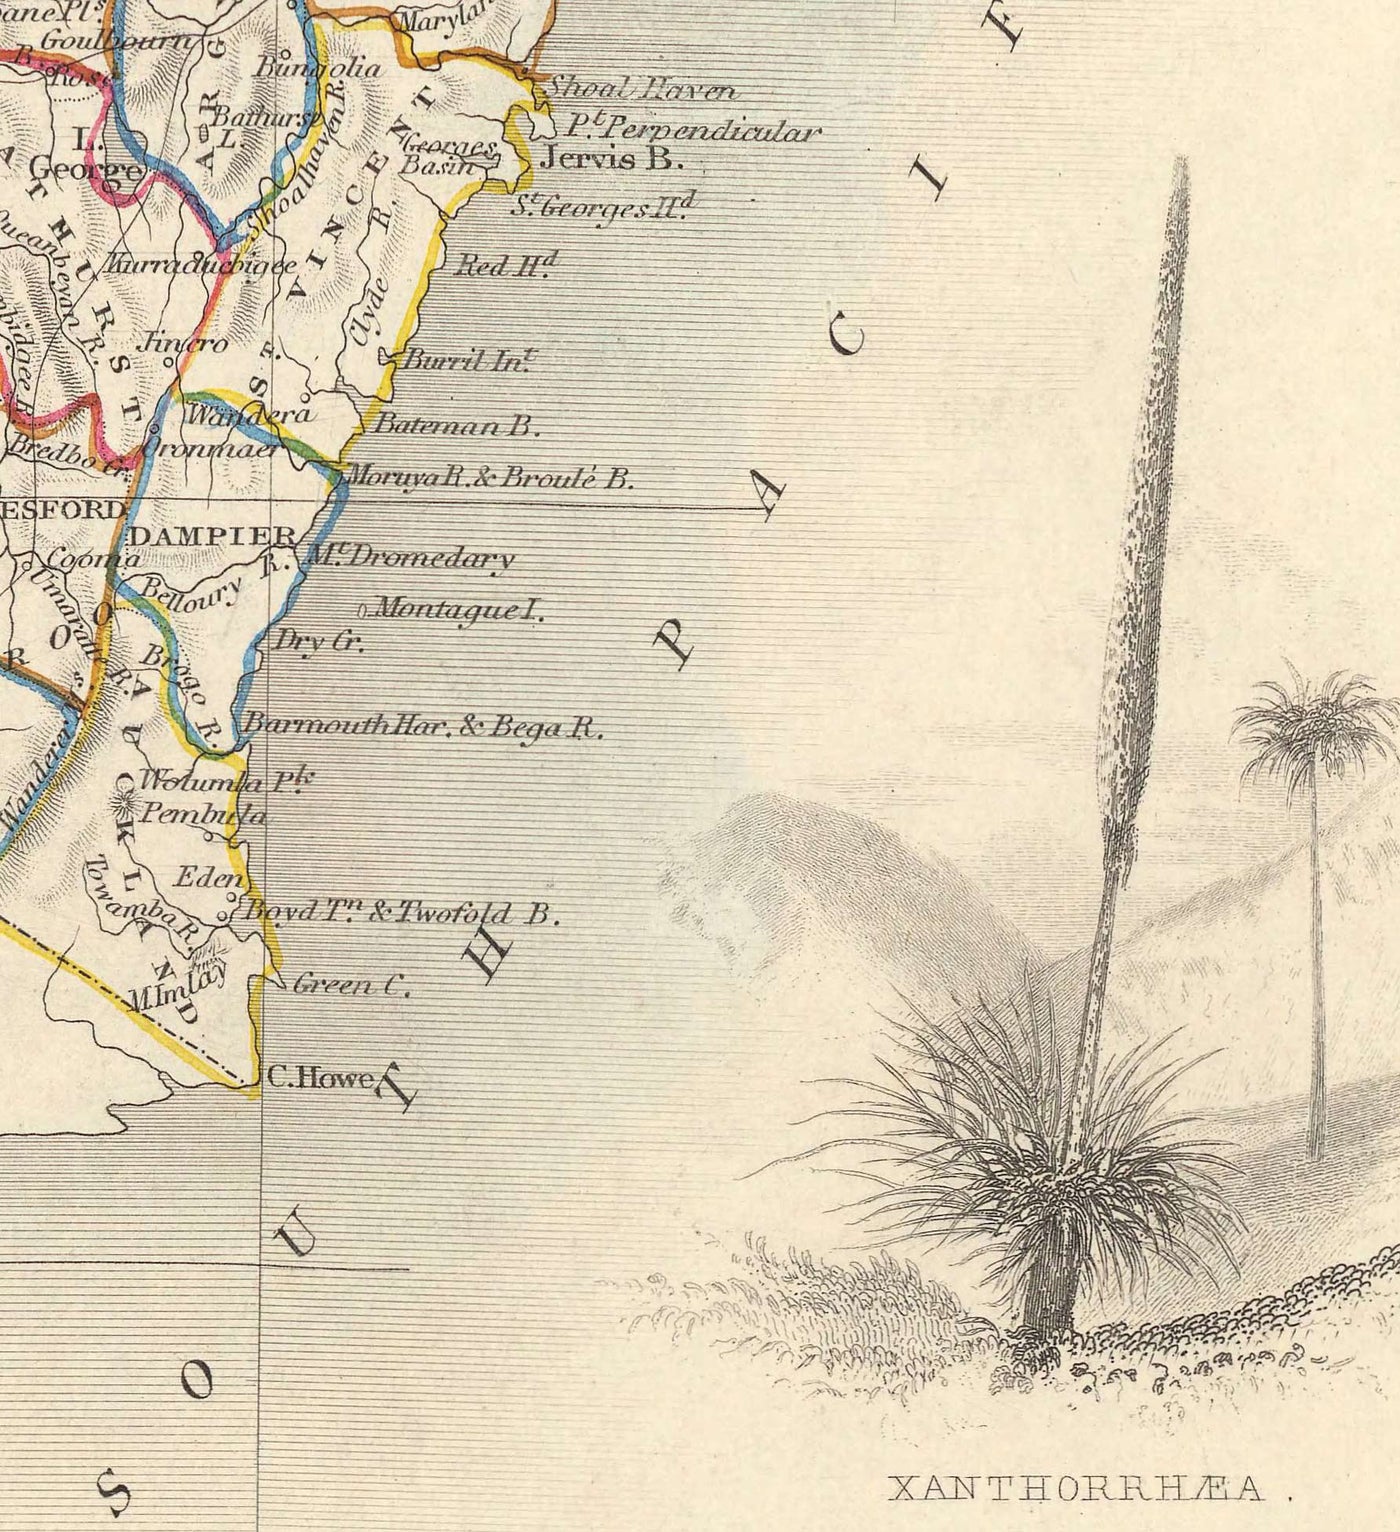 Old Map of New South Wales, Australia 1851 by Tallis & Rapkin - Sydney, Newcastle, Brisbane, Botany Bay, NSW Counties